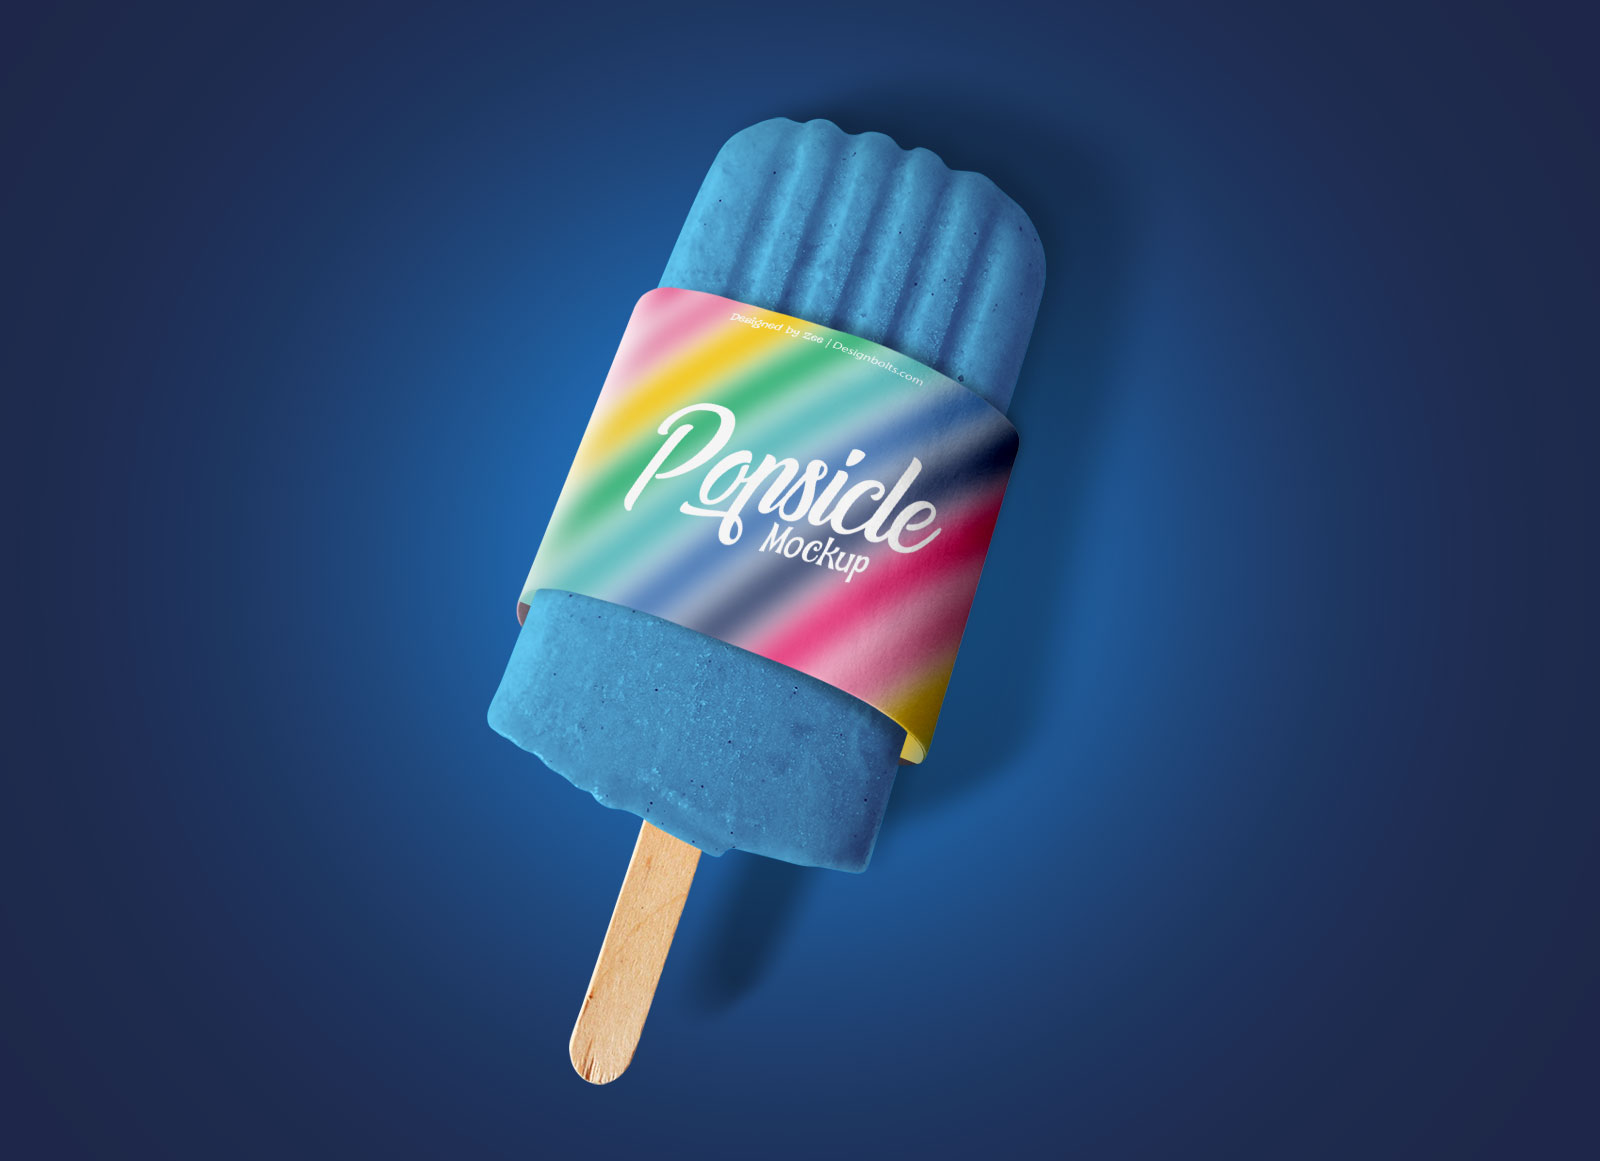 Free-Popsicle-Ice-Cream-Mockup-PSD-File